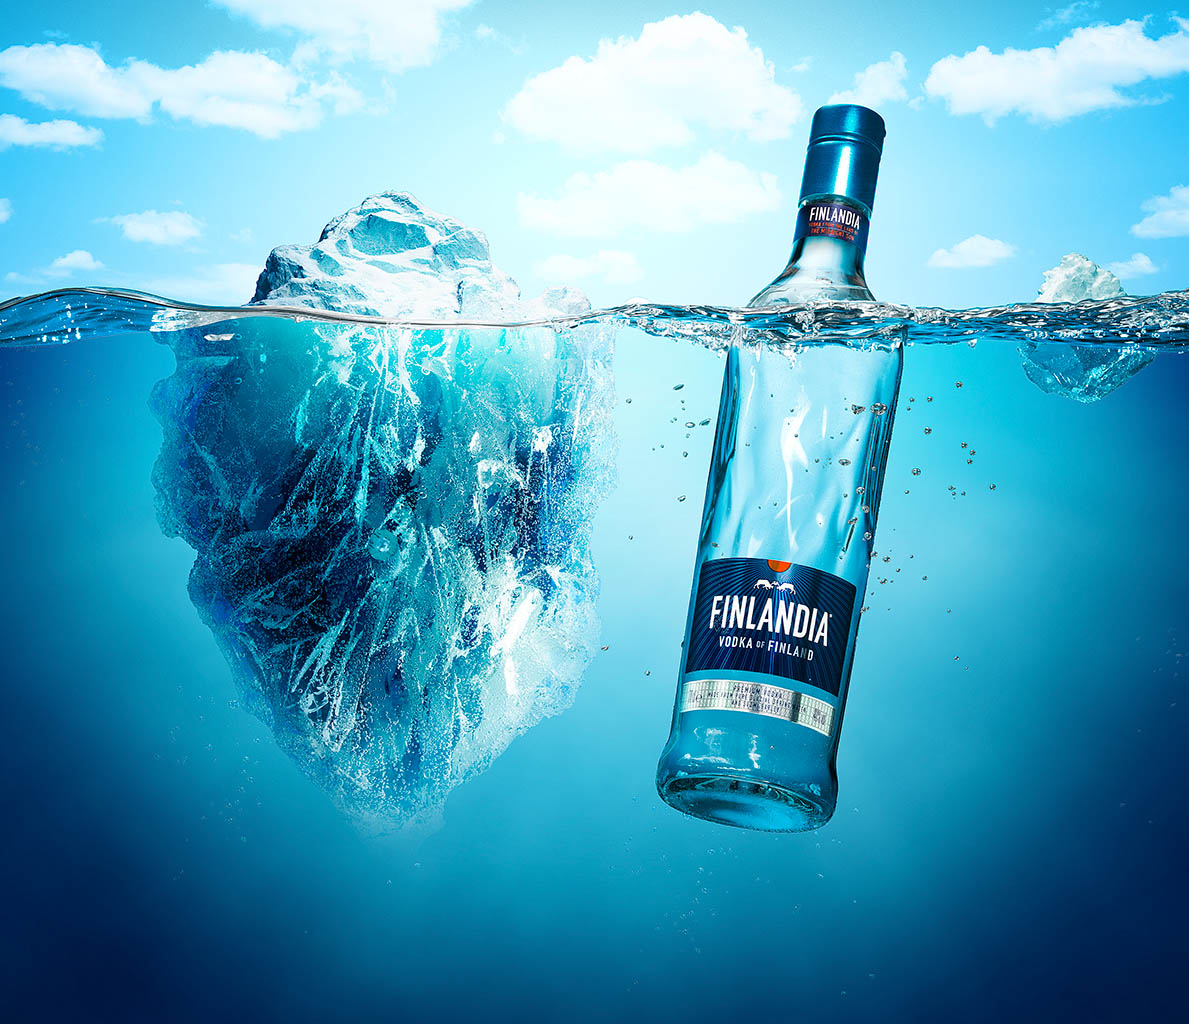 Drinks Photography of Finlandia vodka bottle by Packshot Factory